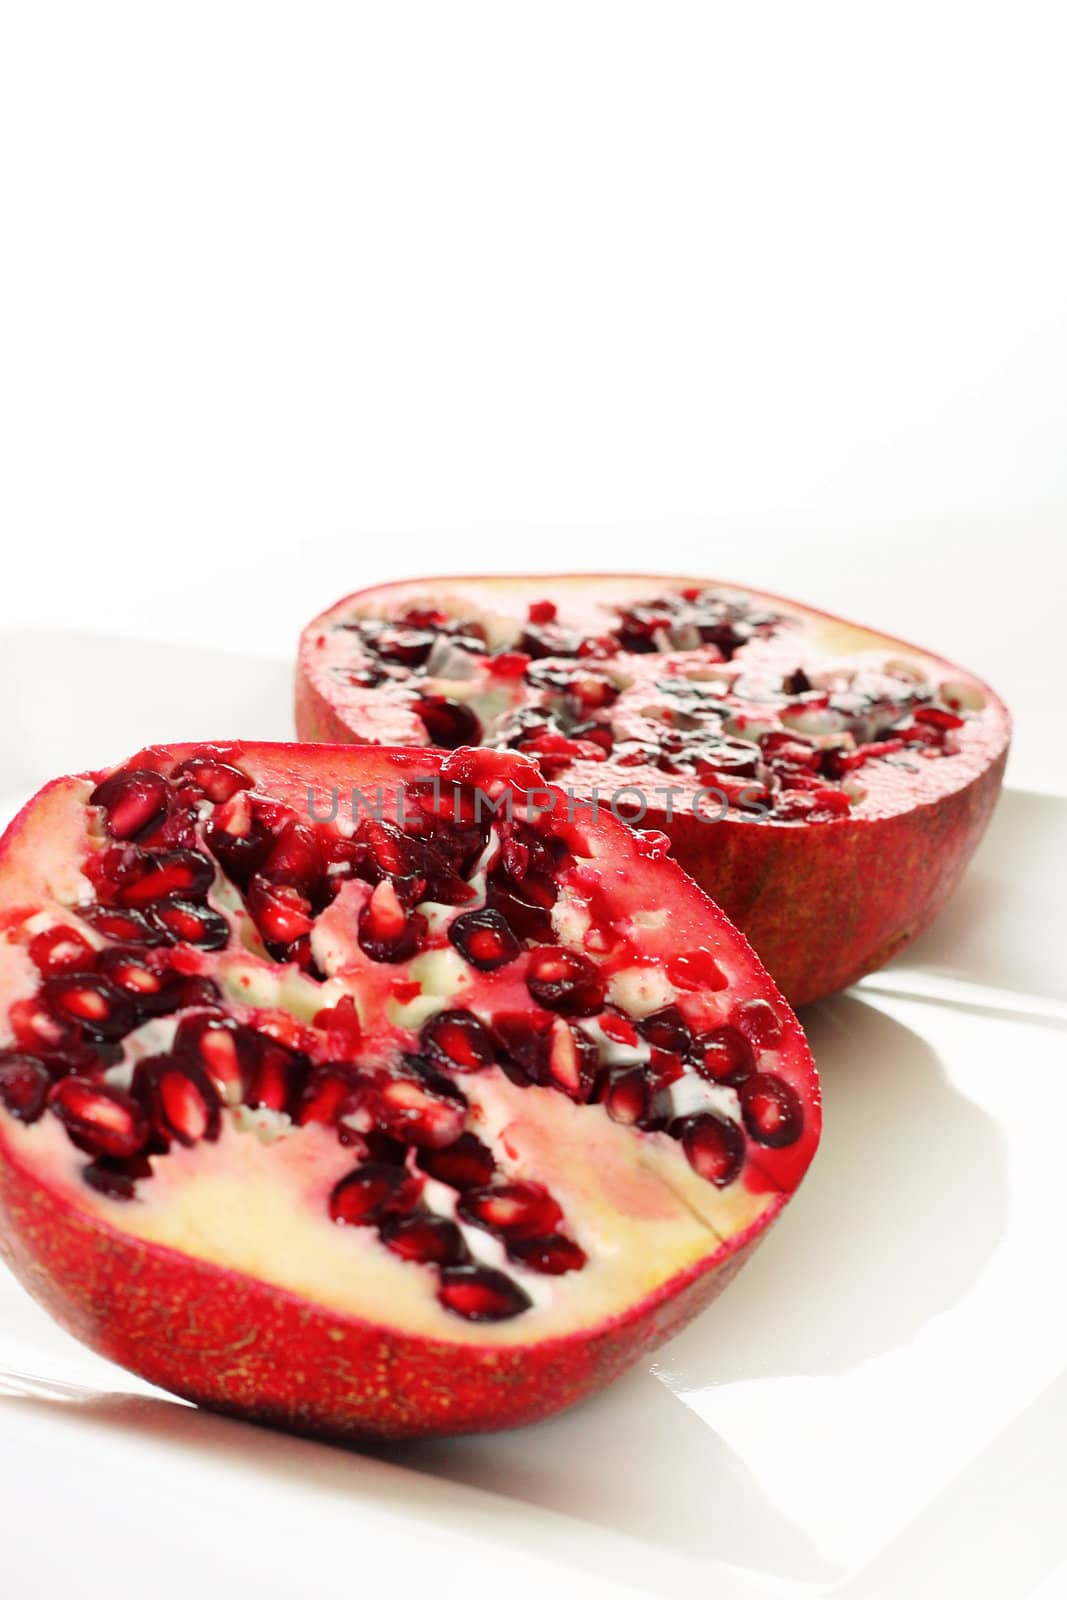 shot of a pomegranate cut vertical by creativestock